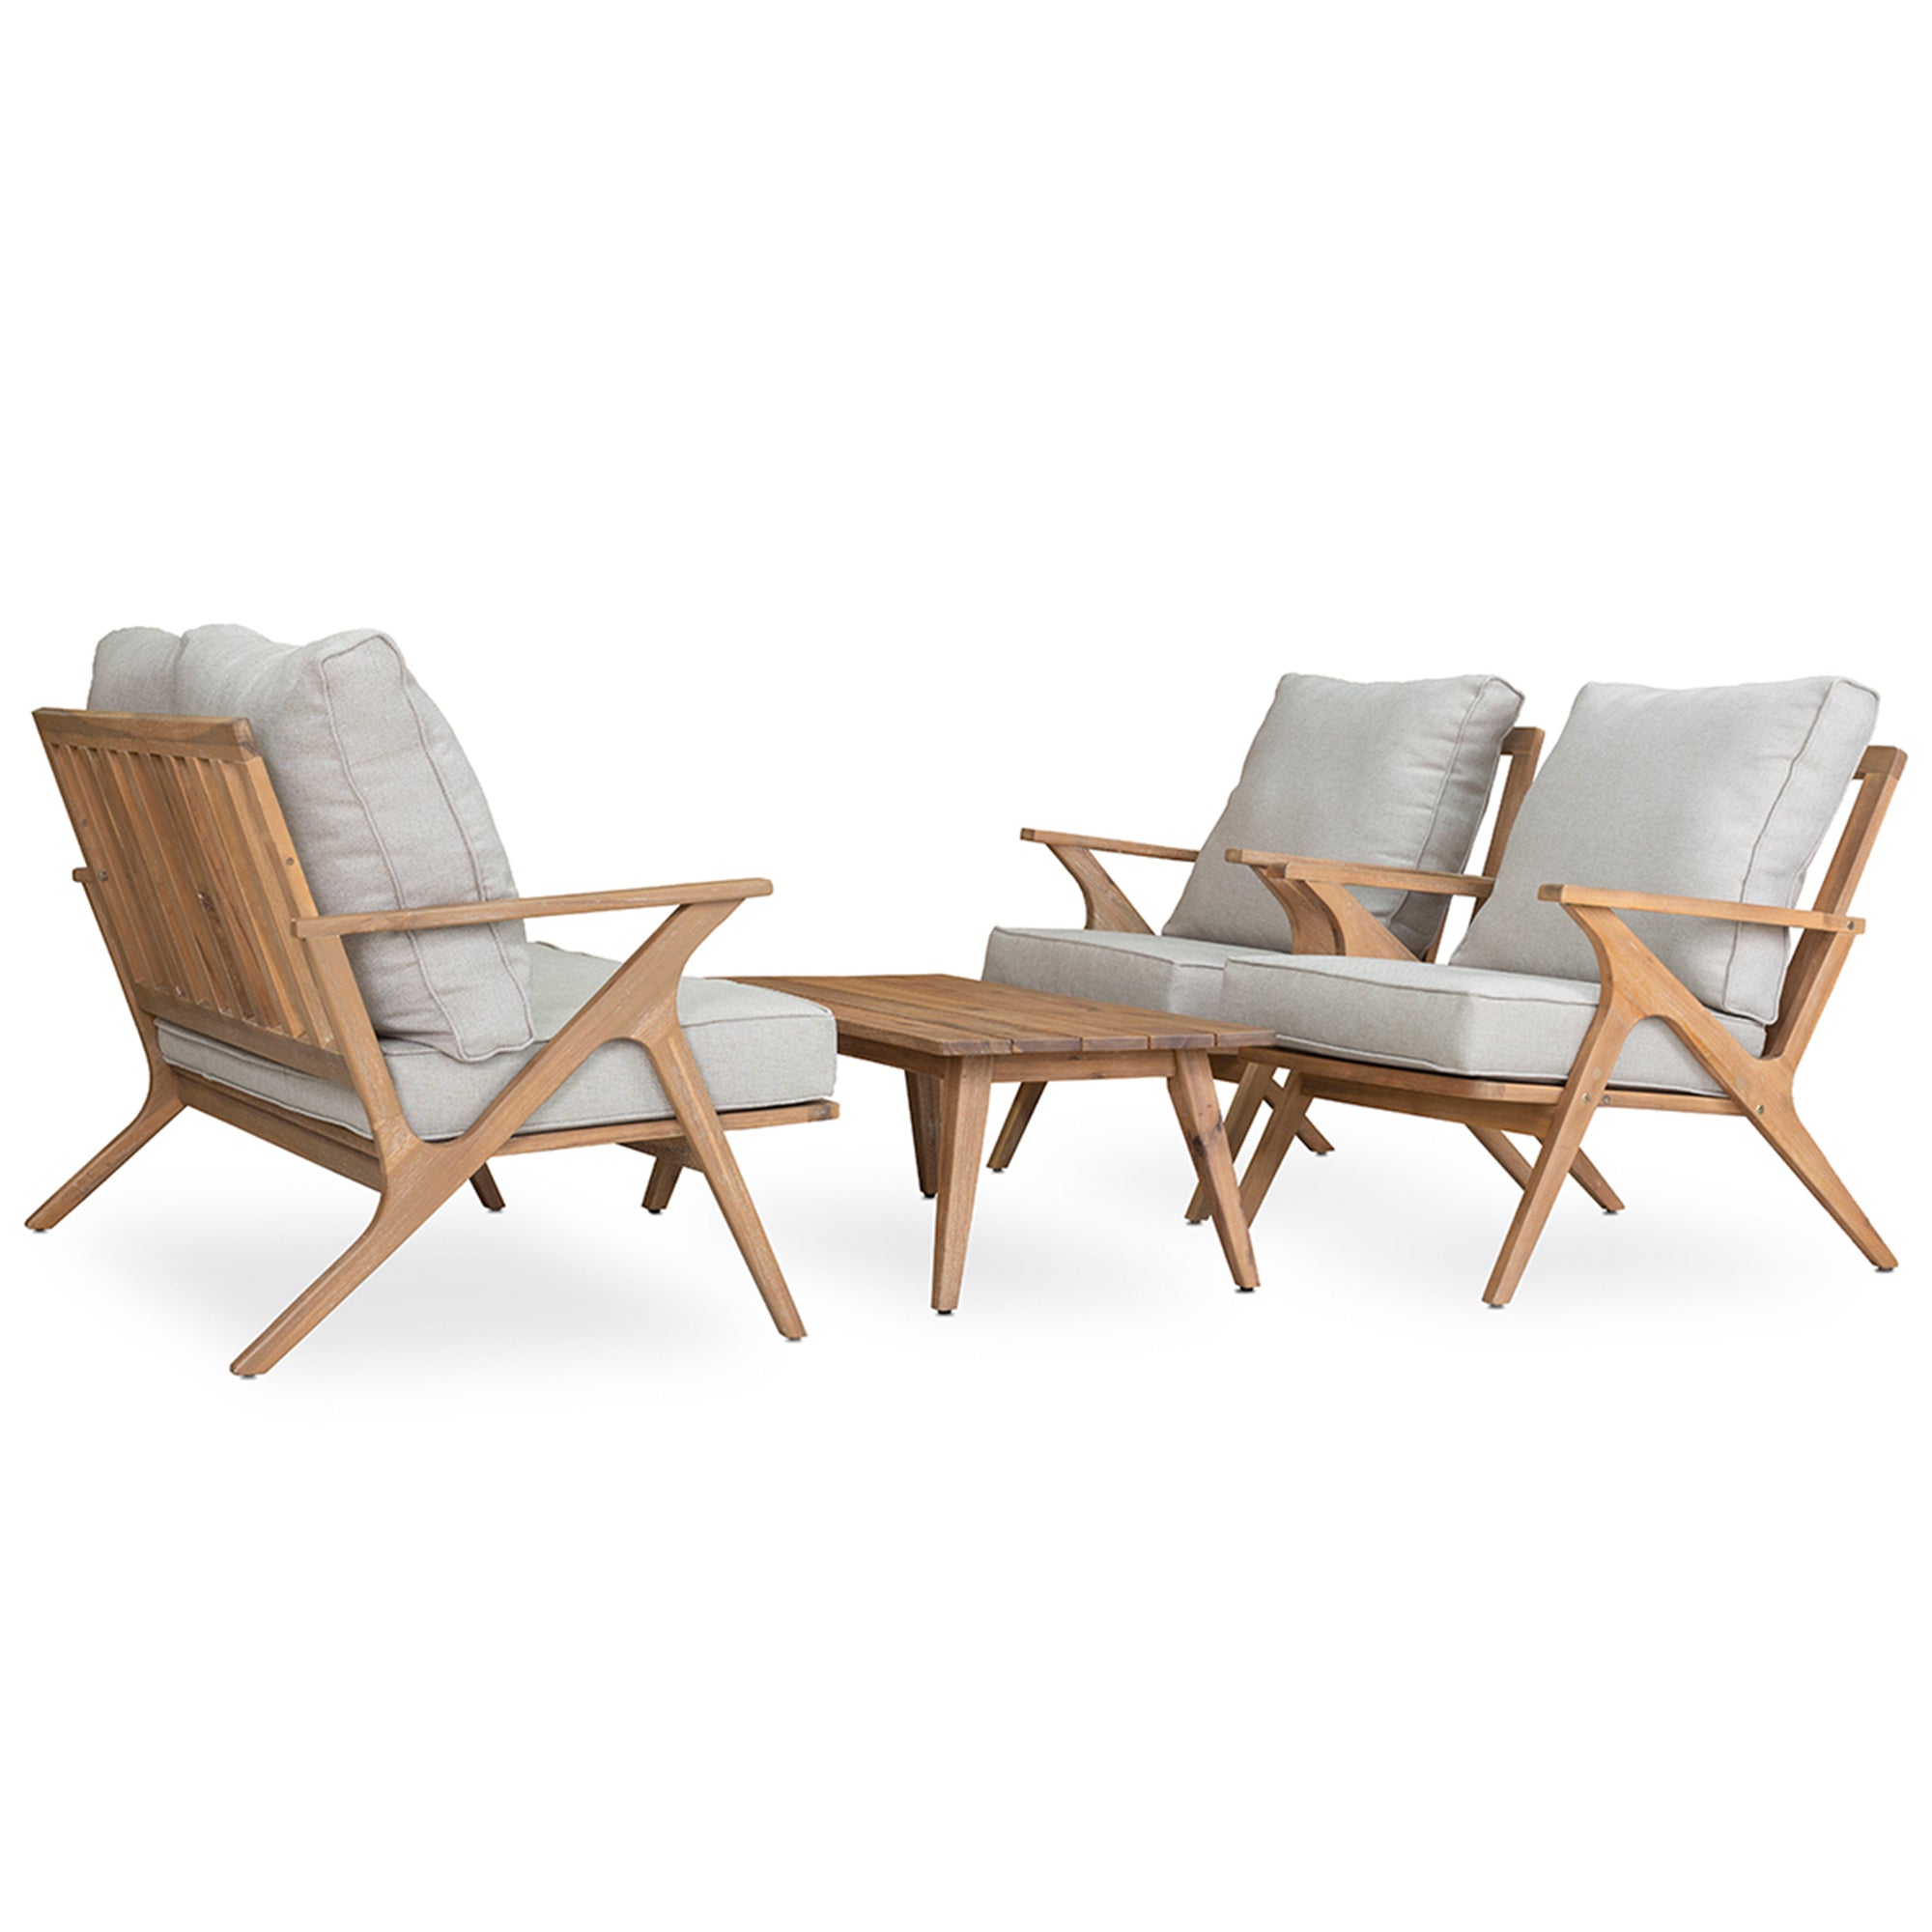 4 PCS Acacia Wood Patio Furniture Set